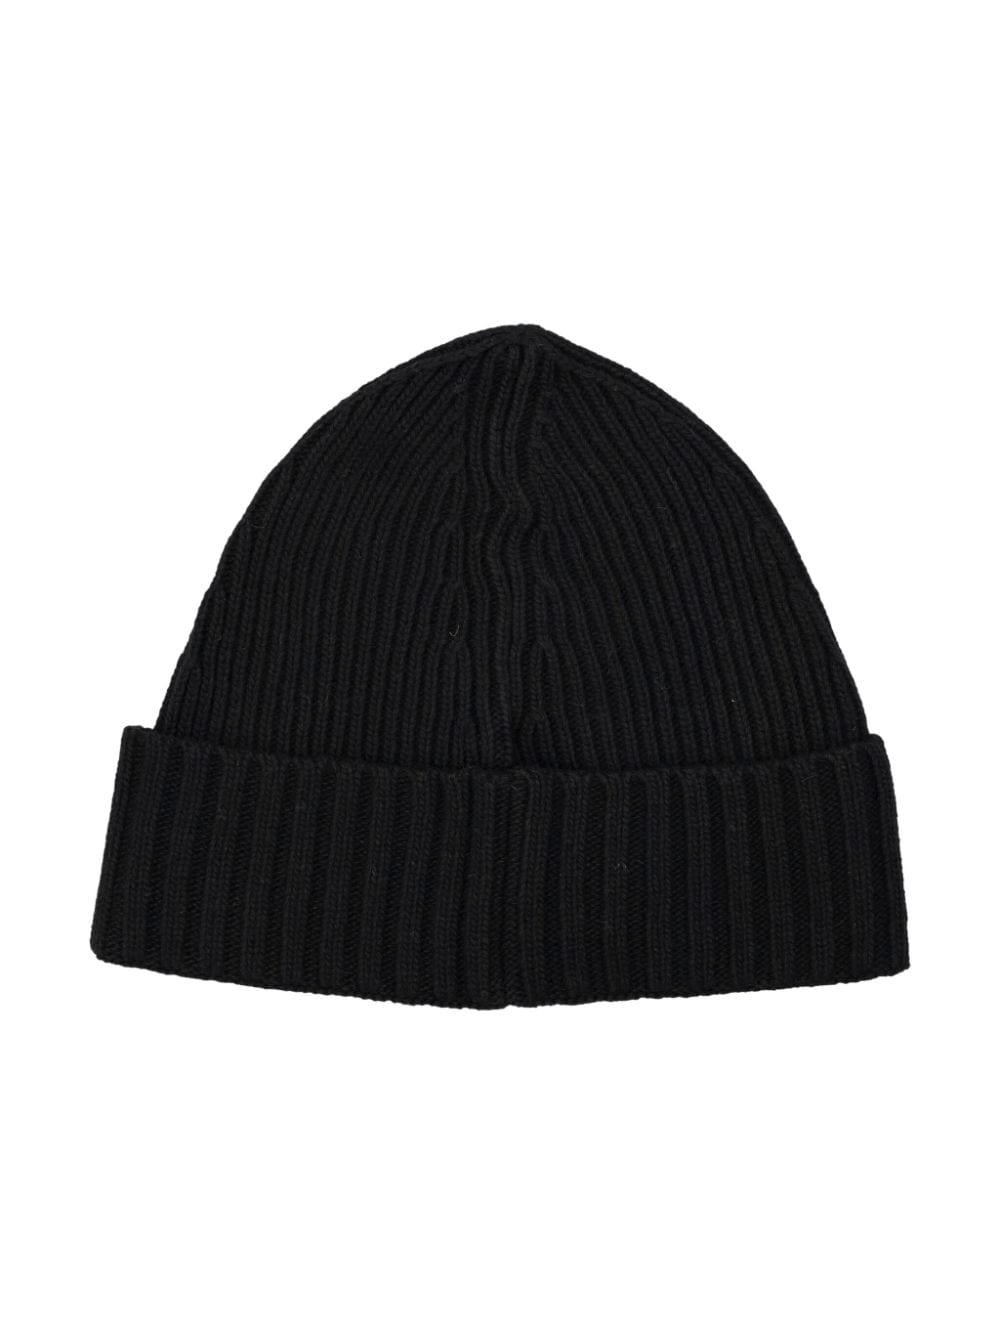 Cappello unisex in misto lana nero